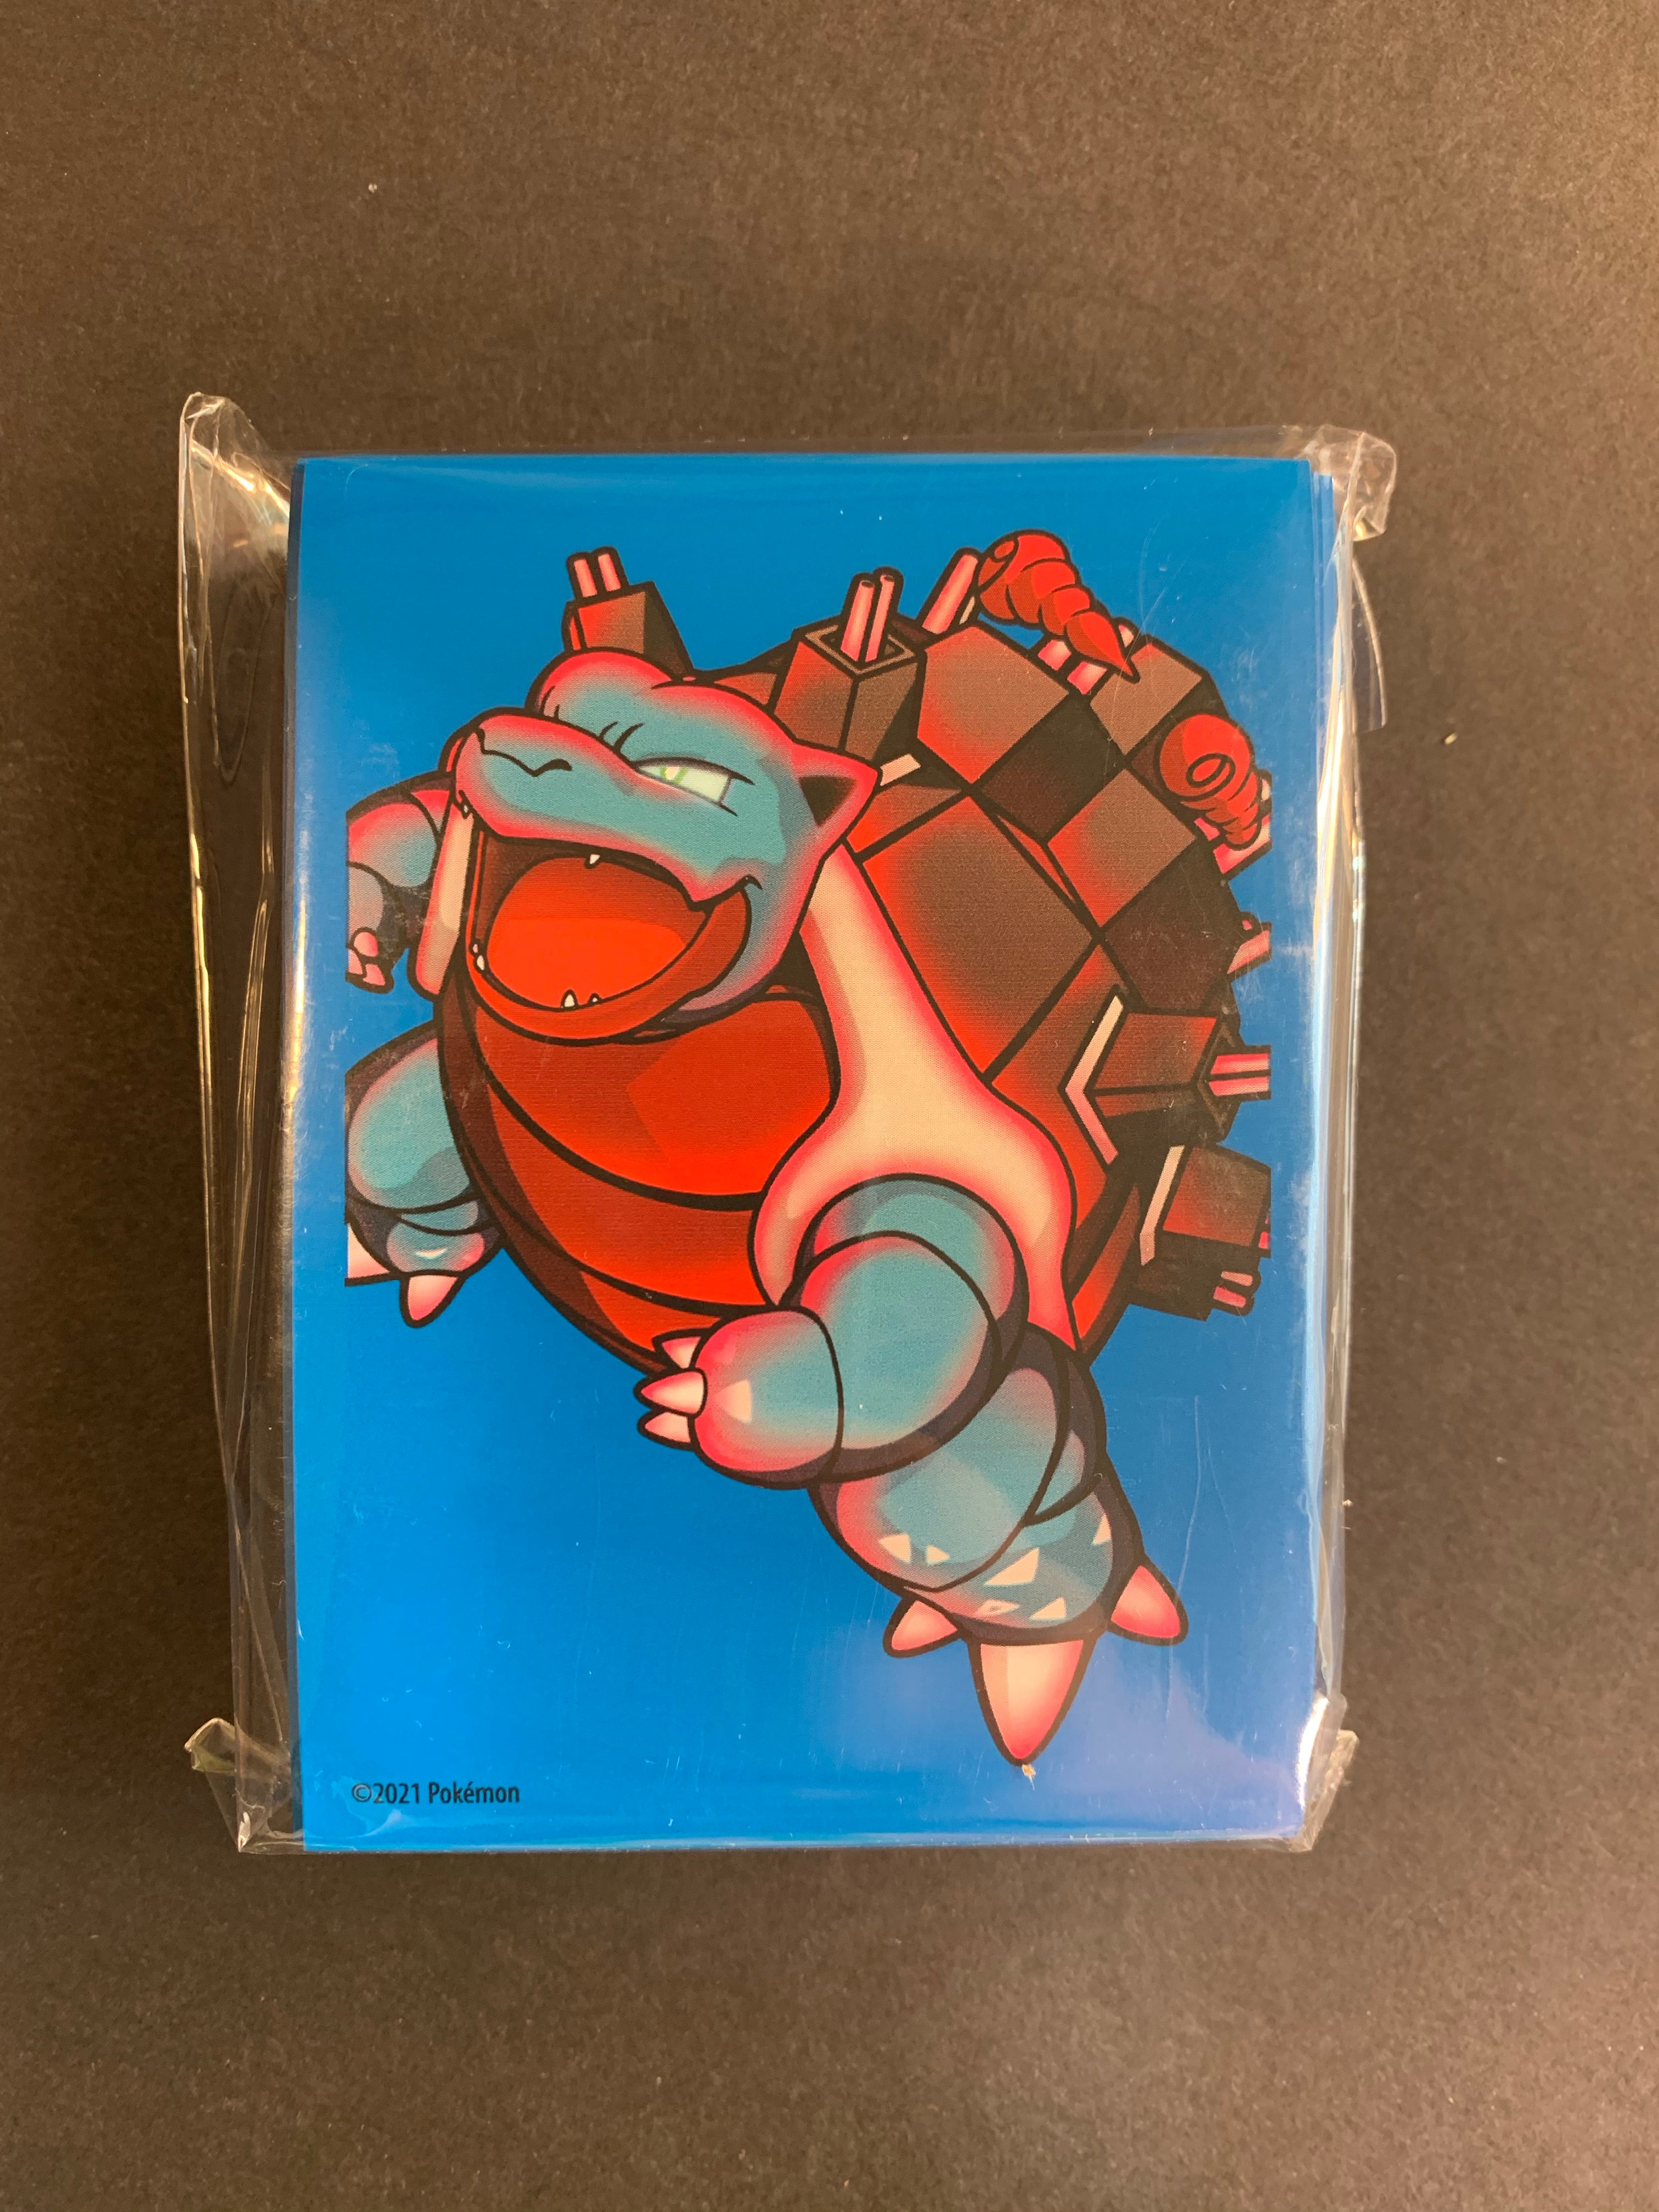 Charizard Sealed Pokemon Card Sleeves (65 Sleeves) – JAB Games13